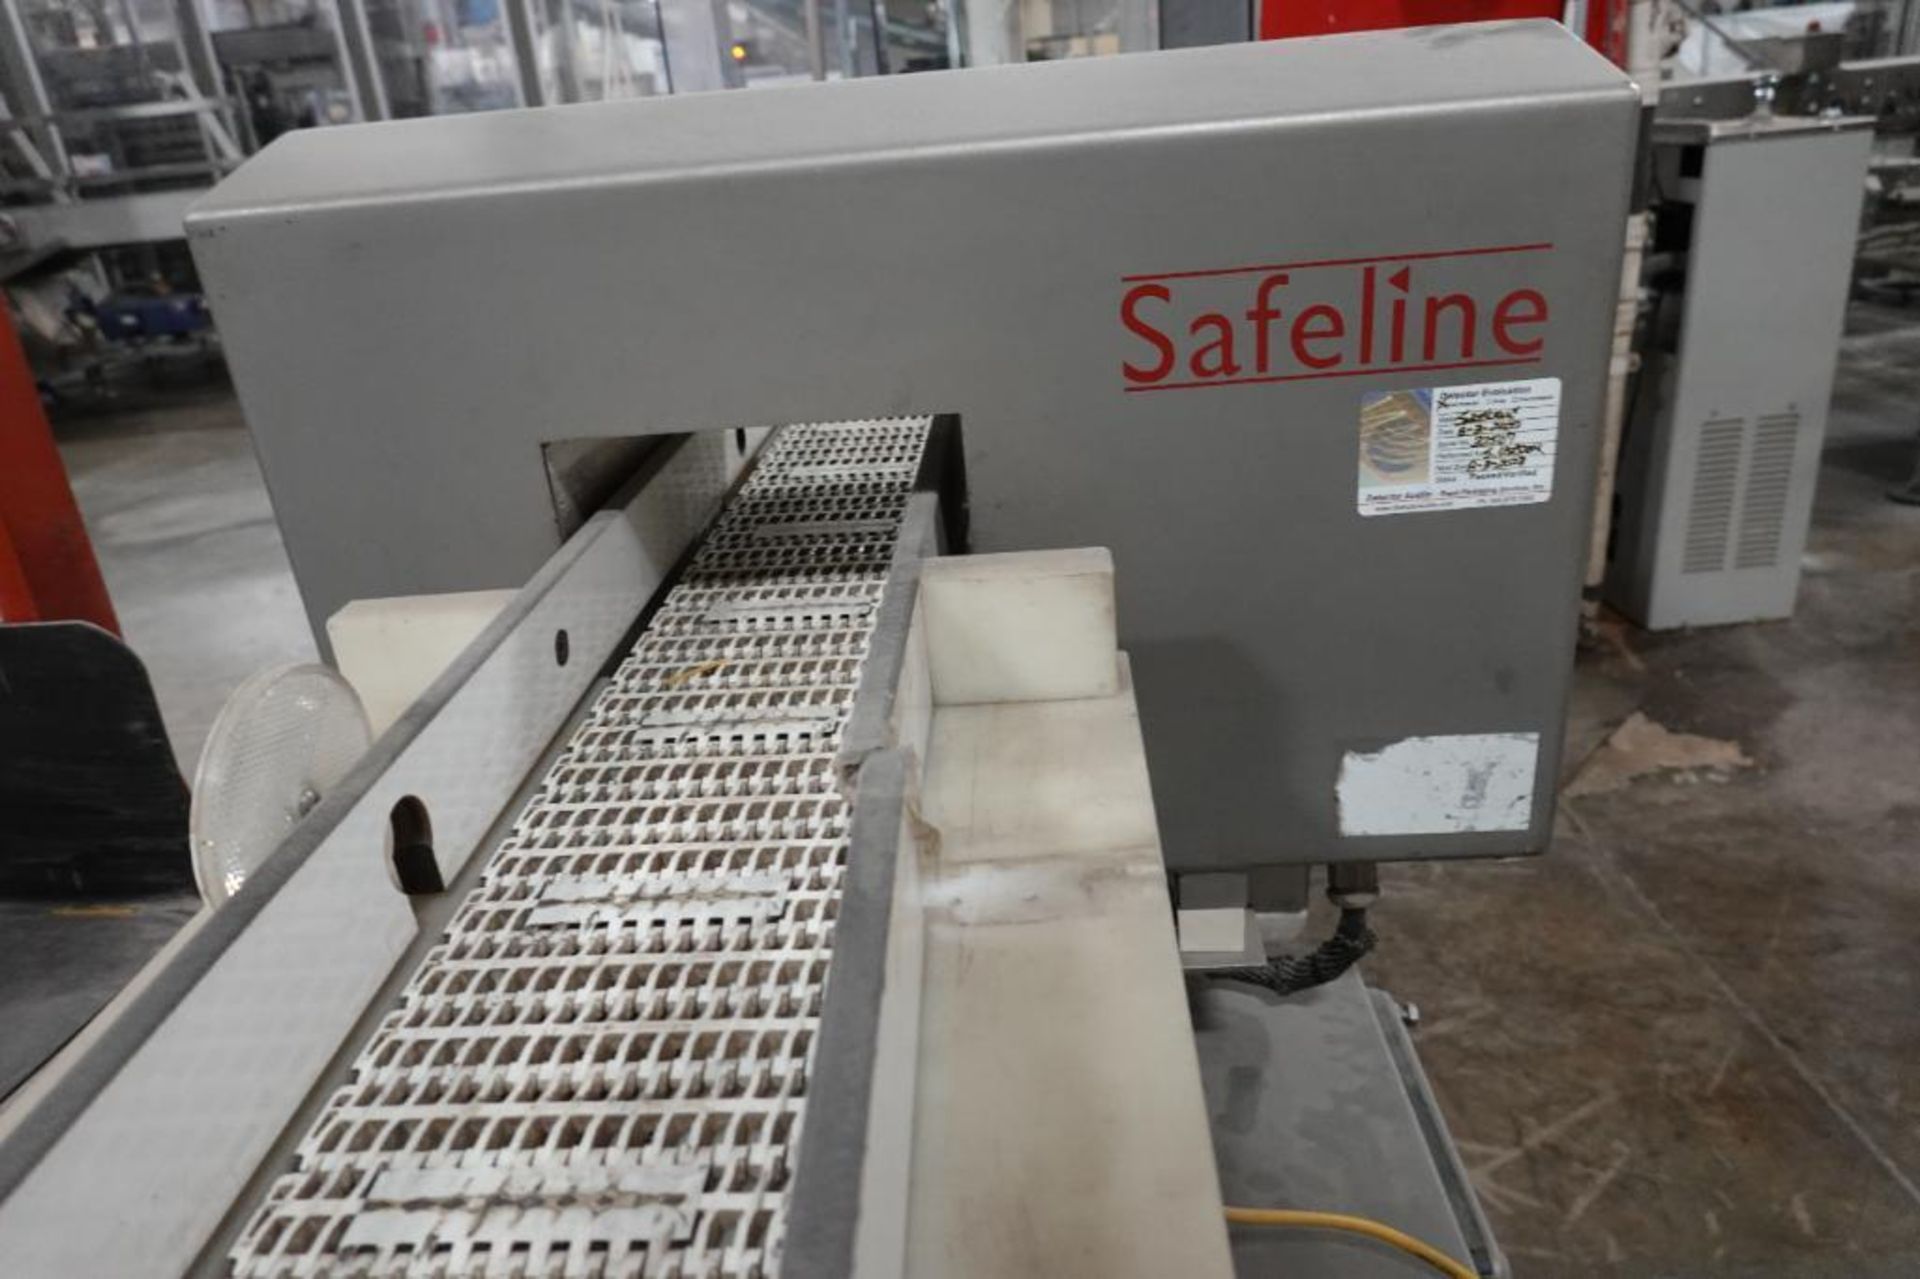 Safeline metal detector with conveyor - Image 3 of 8